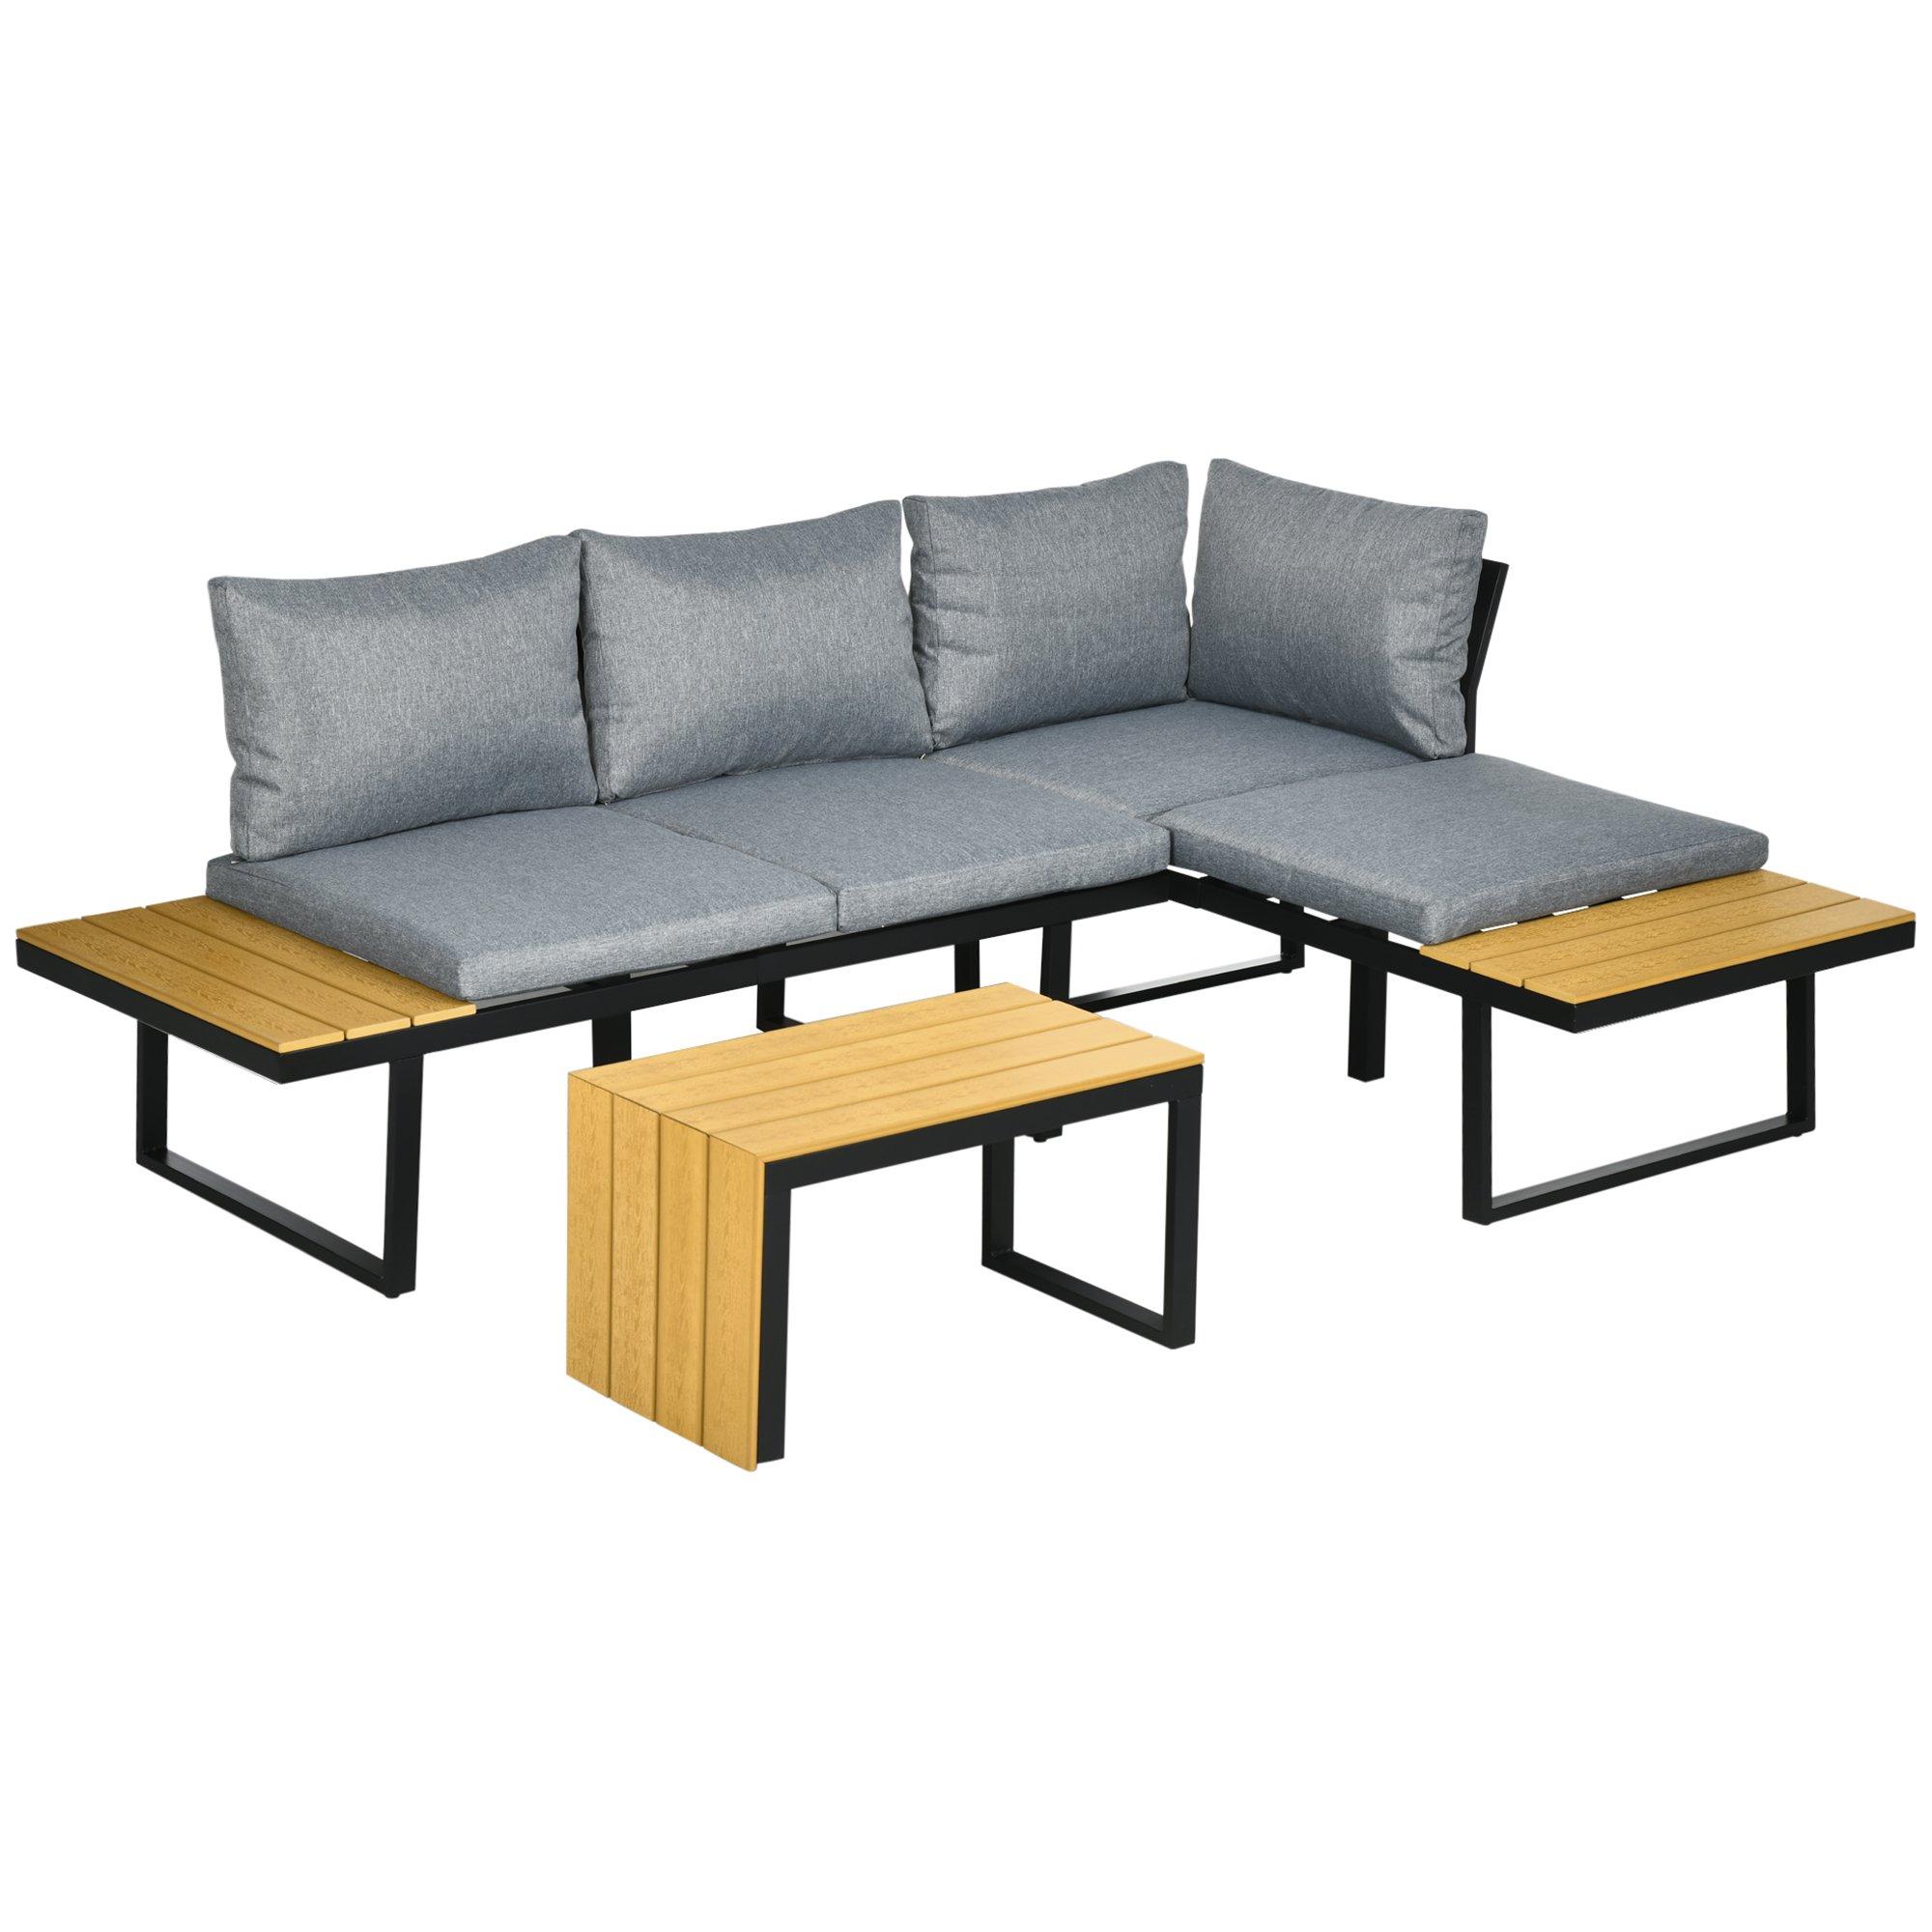 Garden Furniture | 3PCs Patio Furniture Set w/ Cushions, Wood Grain Plastic Top Table | OUTSUNNY